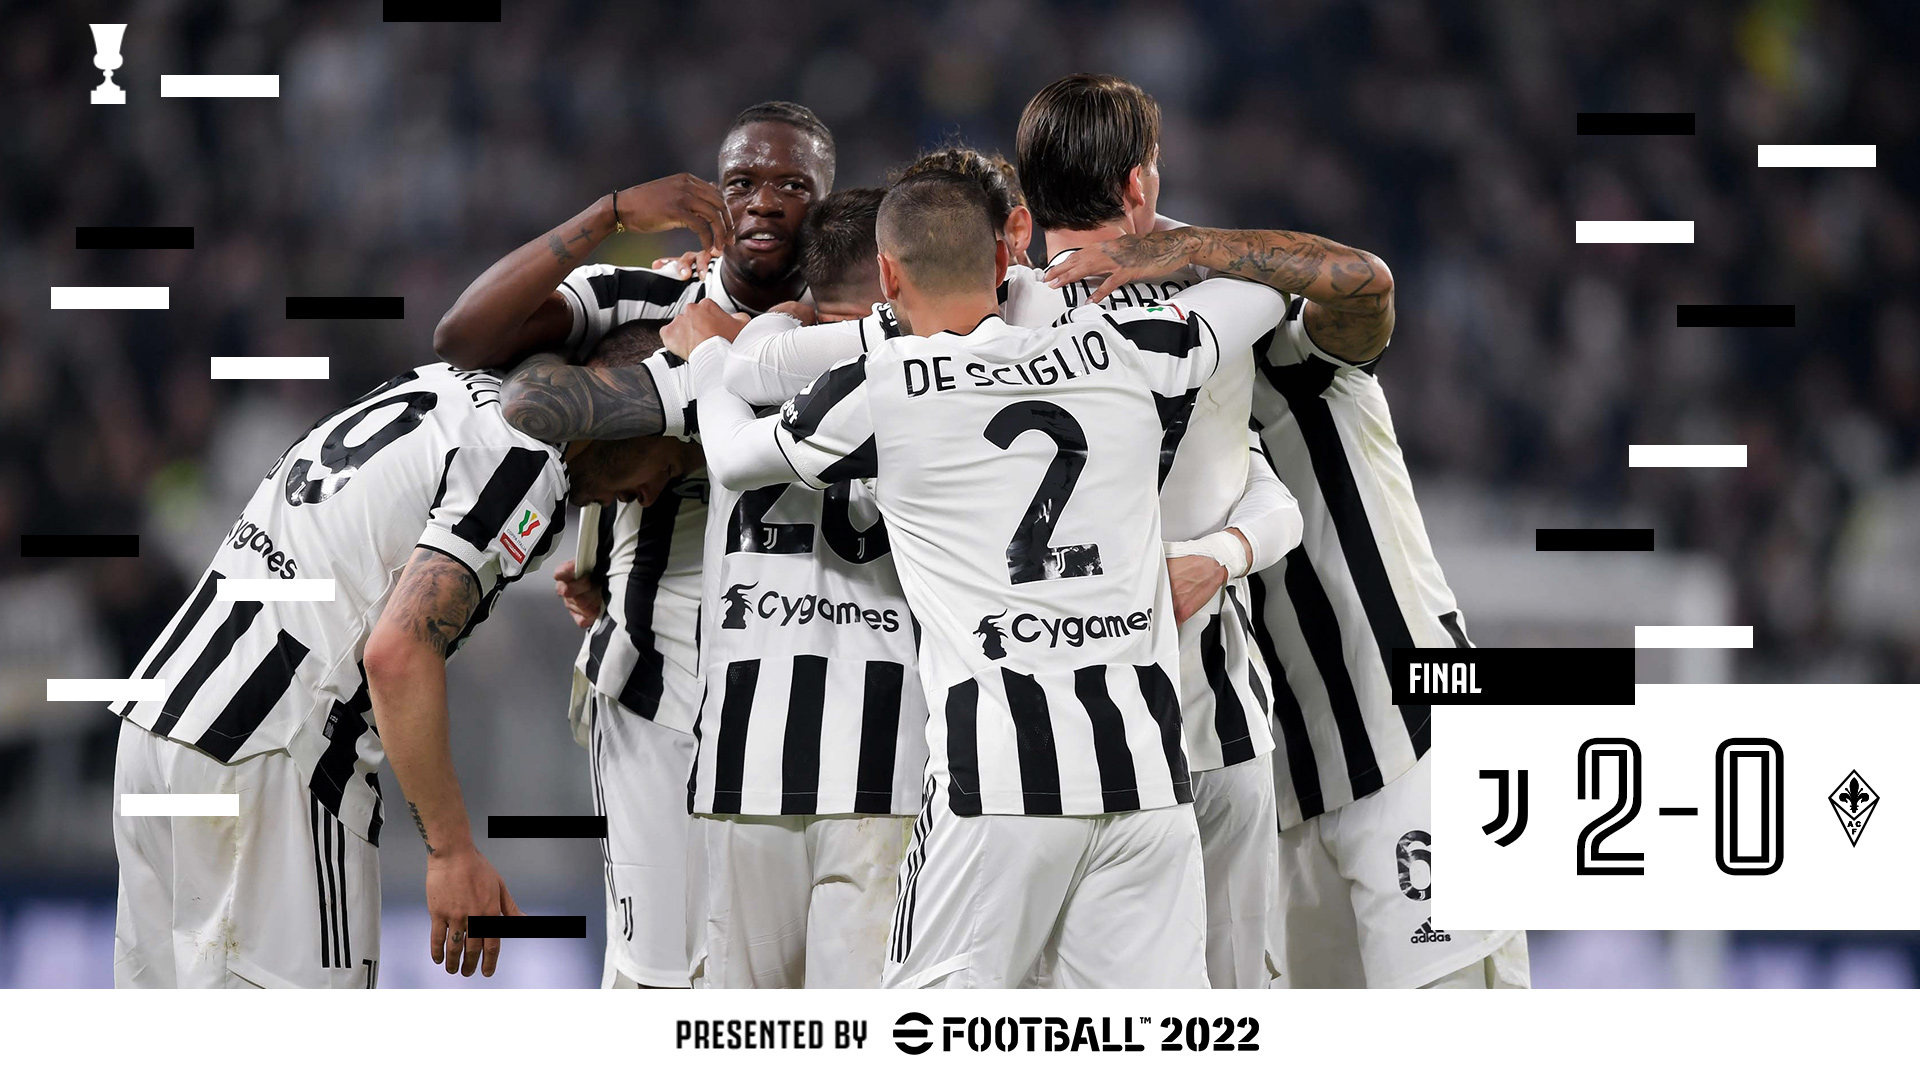 JuventusFC on Twitter: "FINAL | ⏱️ | ¡A LA DEFINICIÓN DE LA COPPA! #CoppaItaliaFrecciarossa #ForzaJuve https://t.co/C0Un5wU5H2" / Twitter